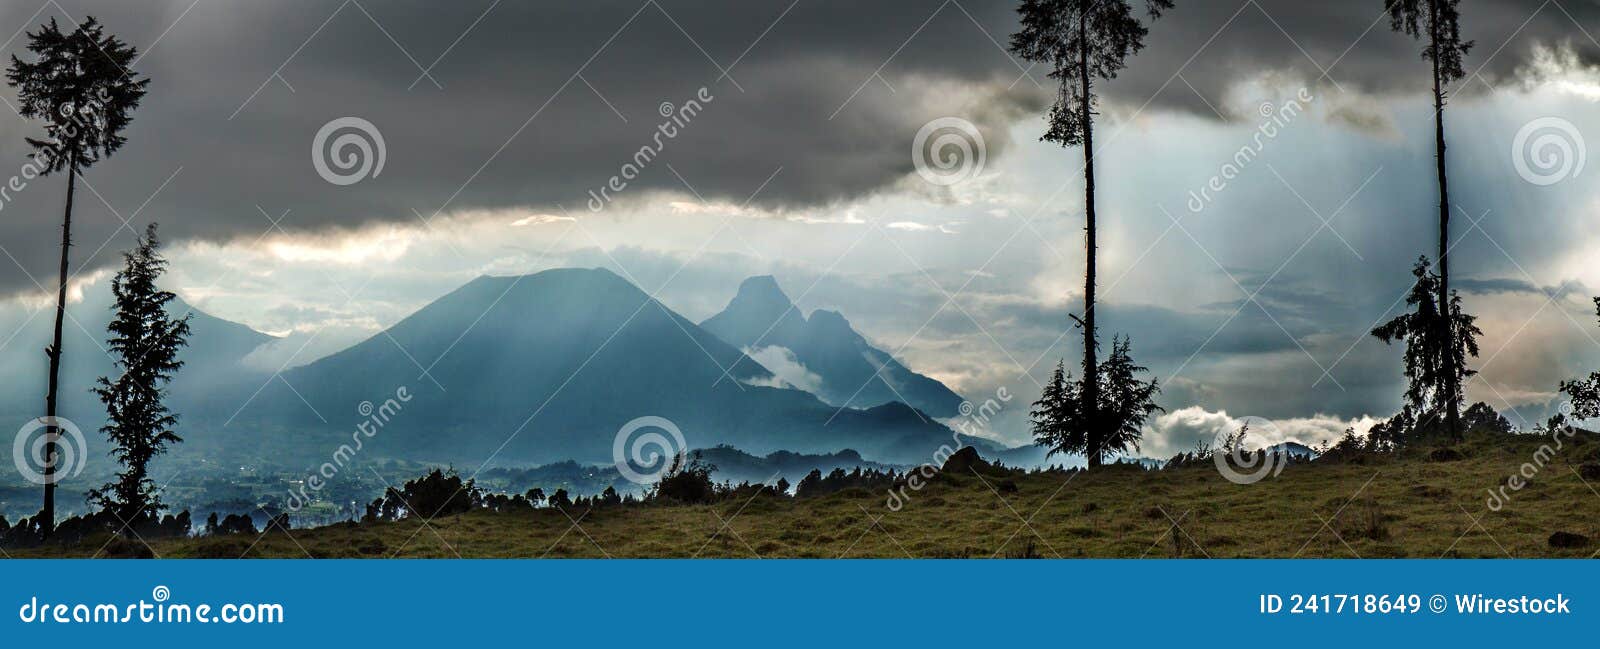 volcanoes national park in rwanda and drc